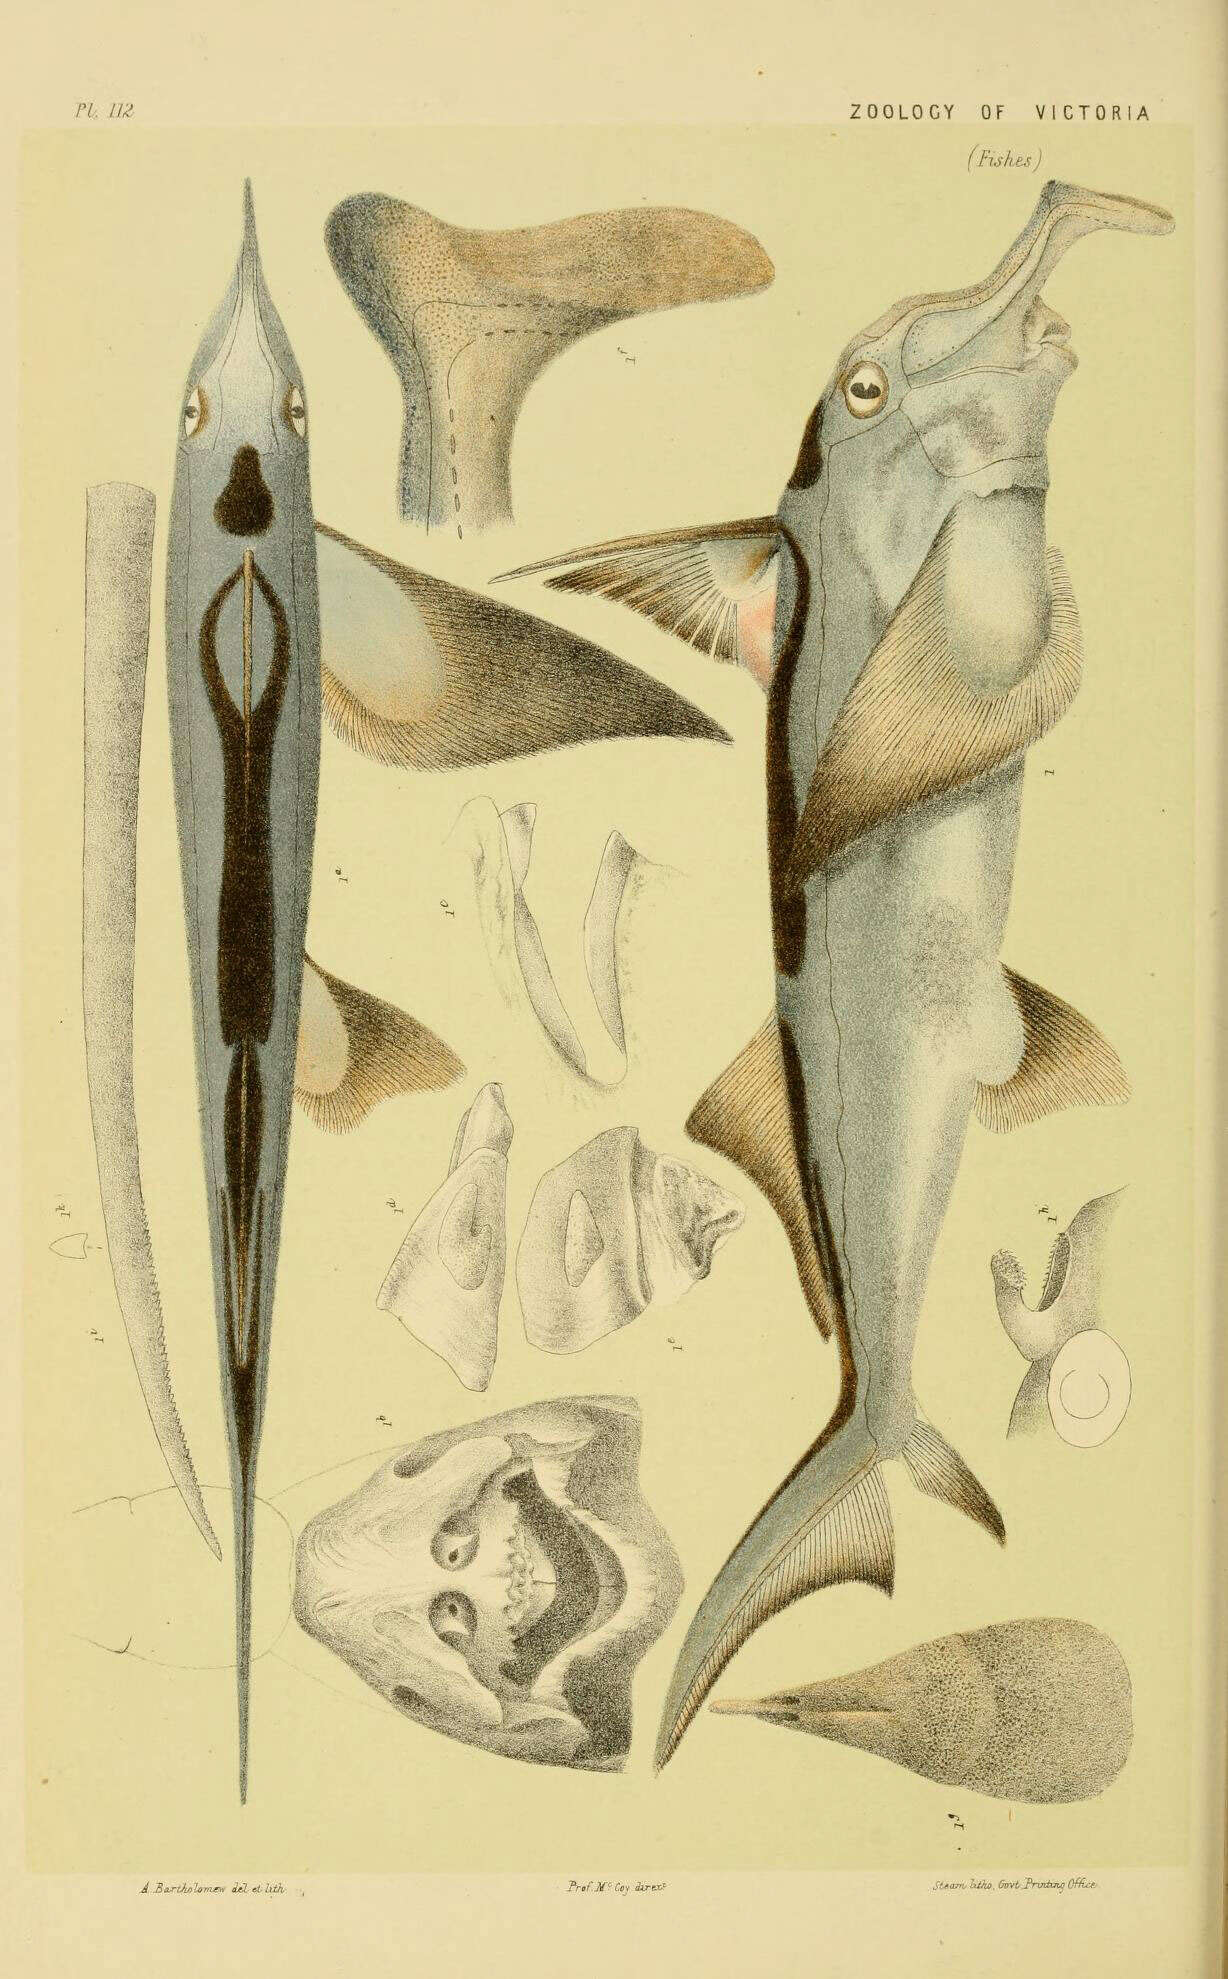 Image of Callorhinchus